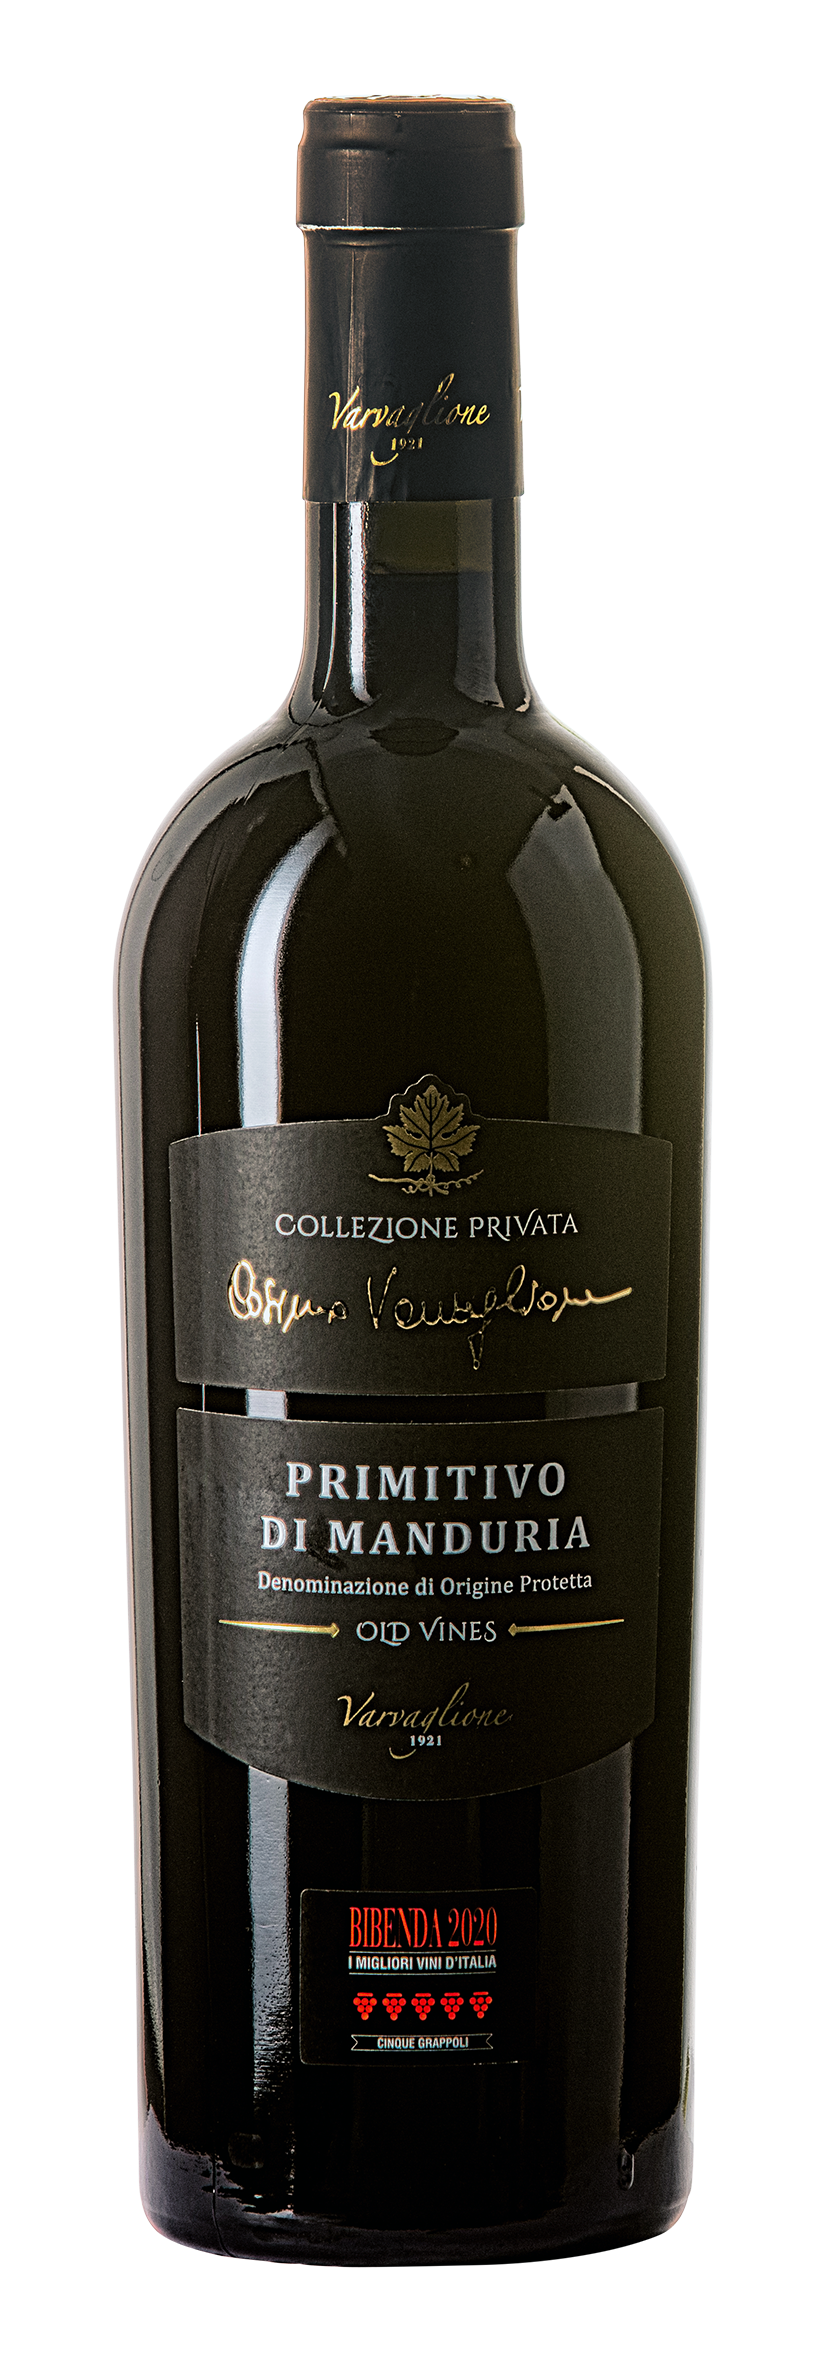 Primitivo di Manduria Cosimo Varvaglione DOP Old Wines 2016